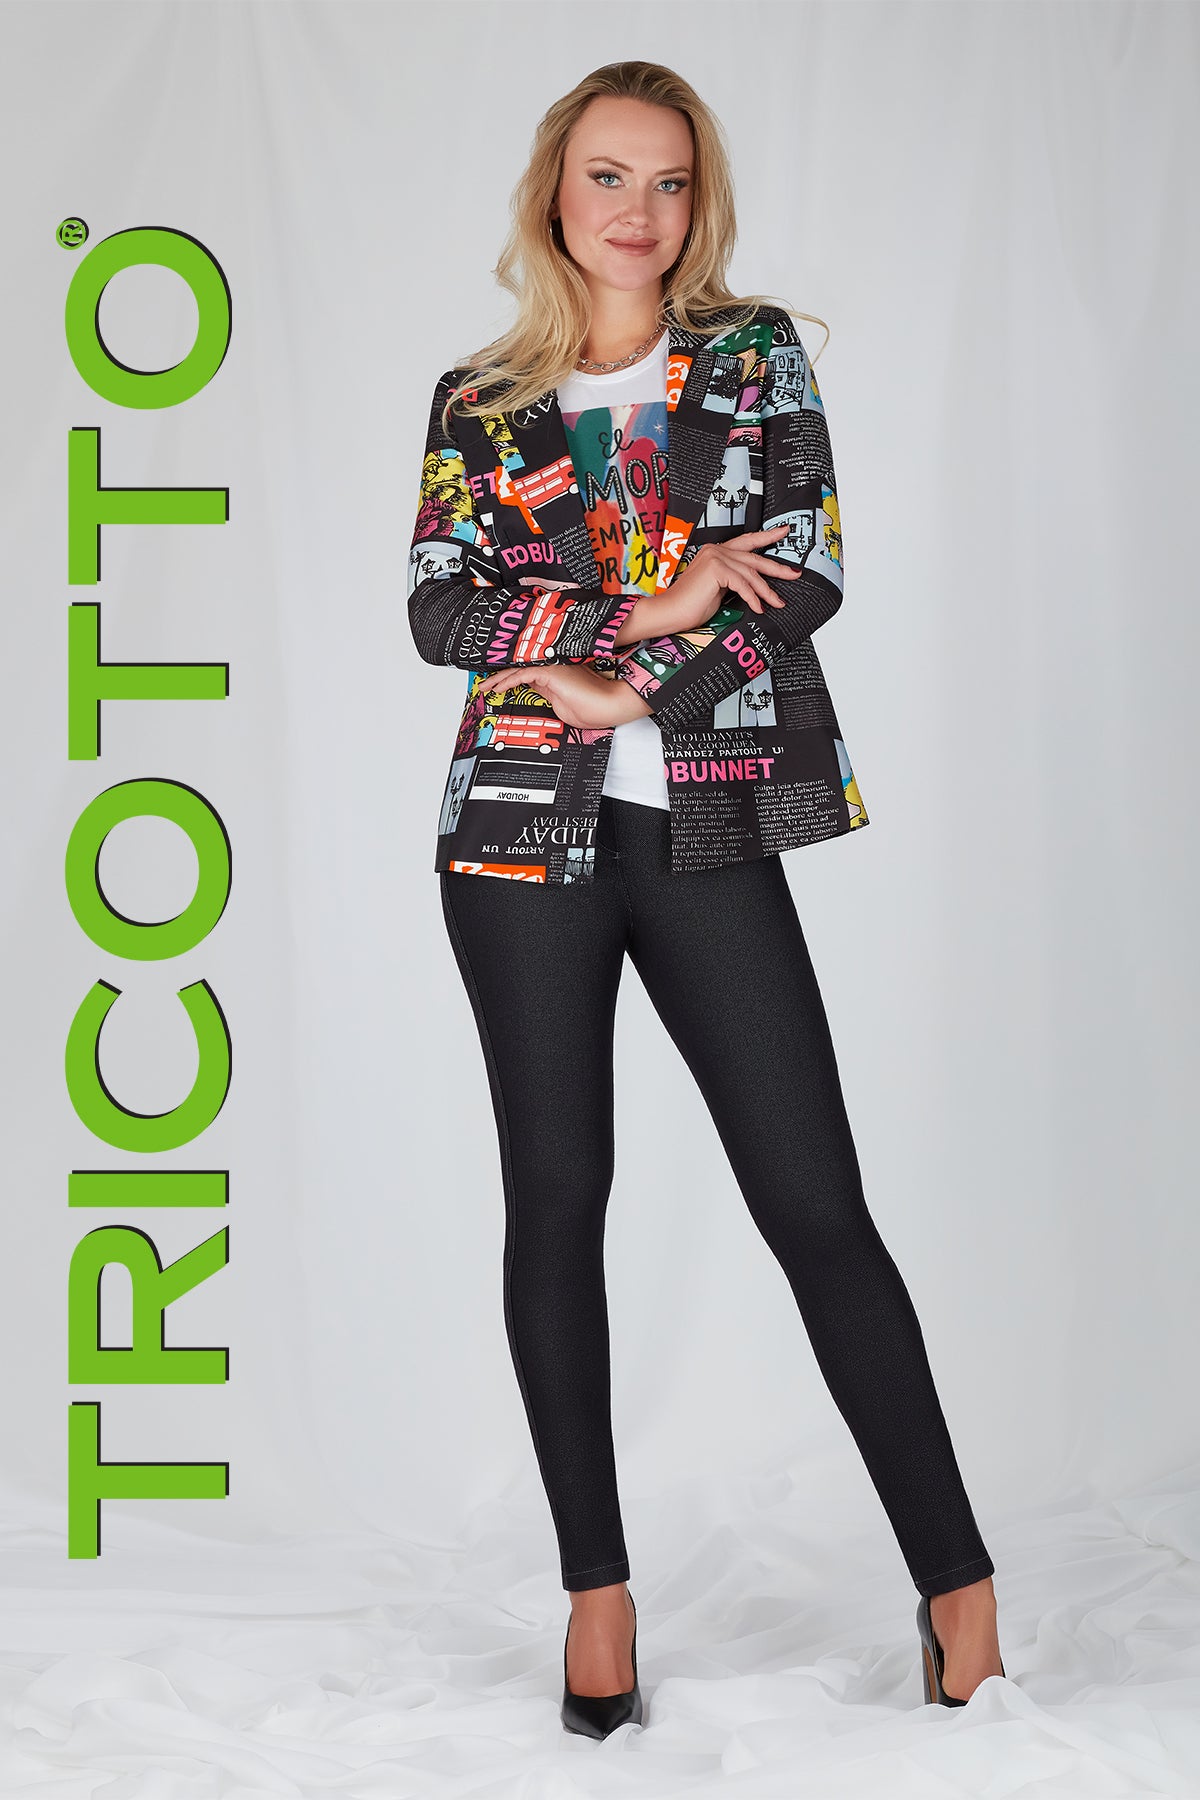 Tricotto Black multi print blazer with button front